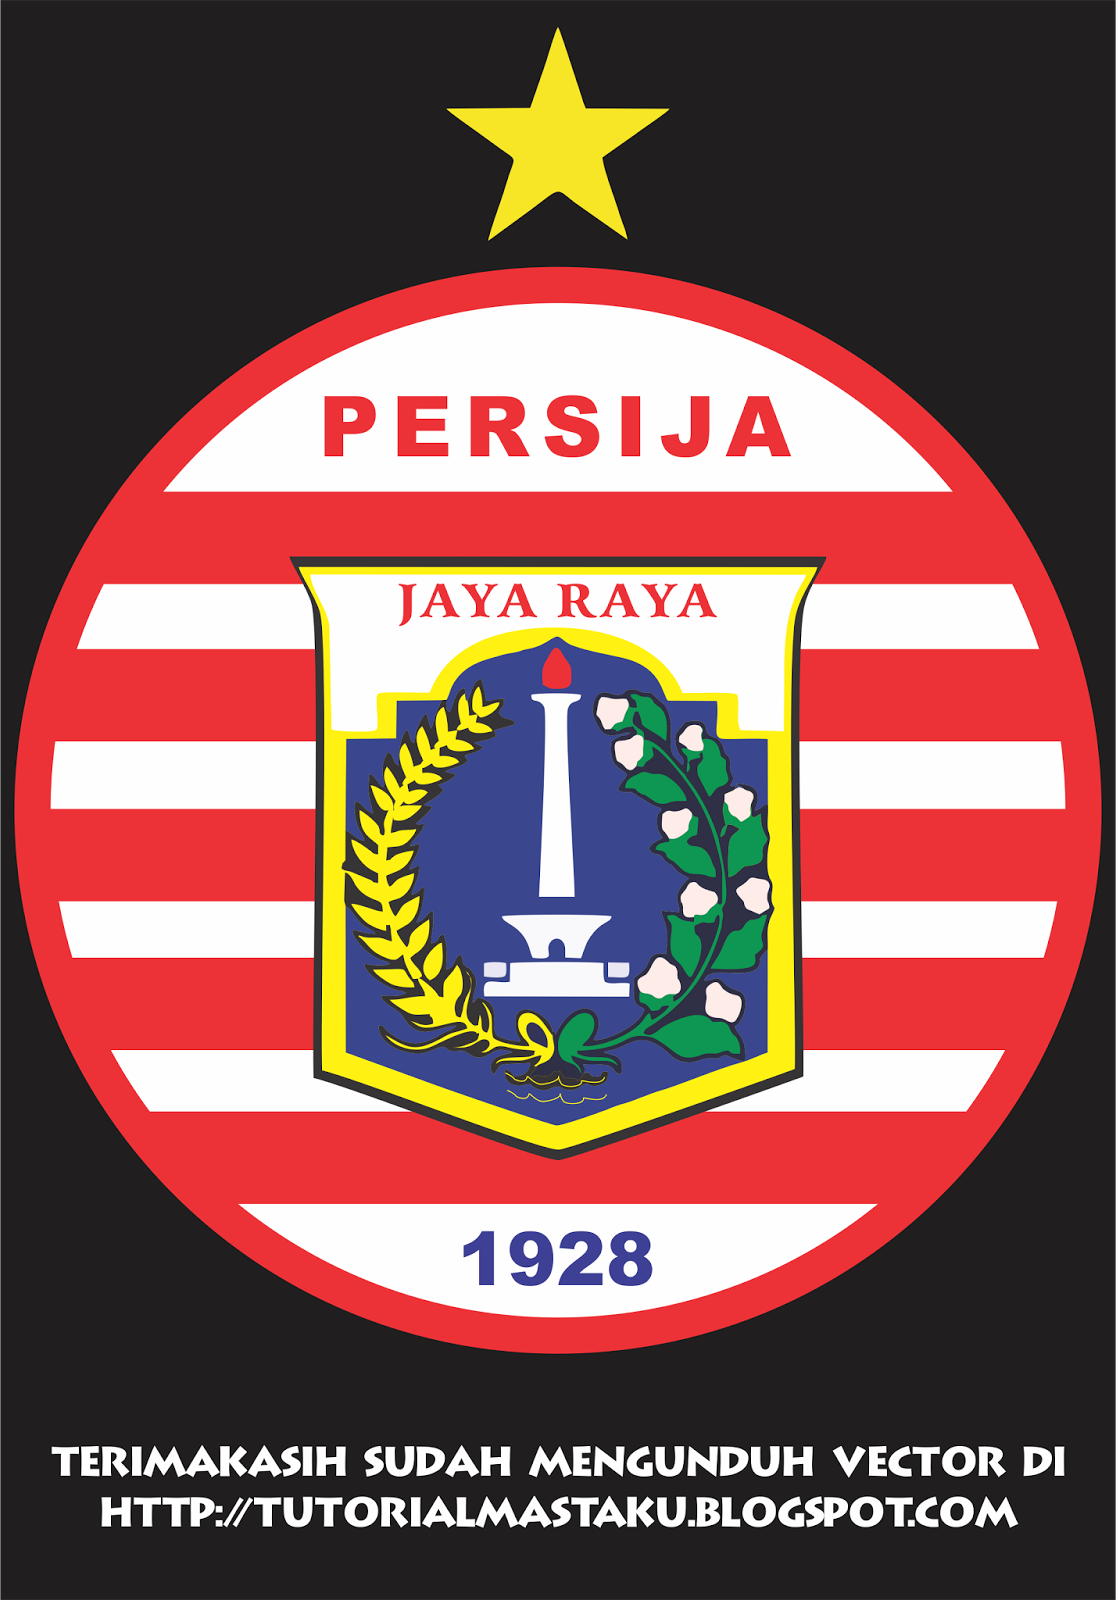 Download Vector Logo Persija Jakarta Gratis! - Tutorial Masta